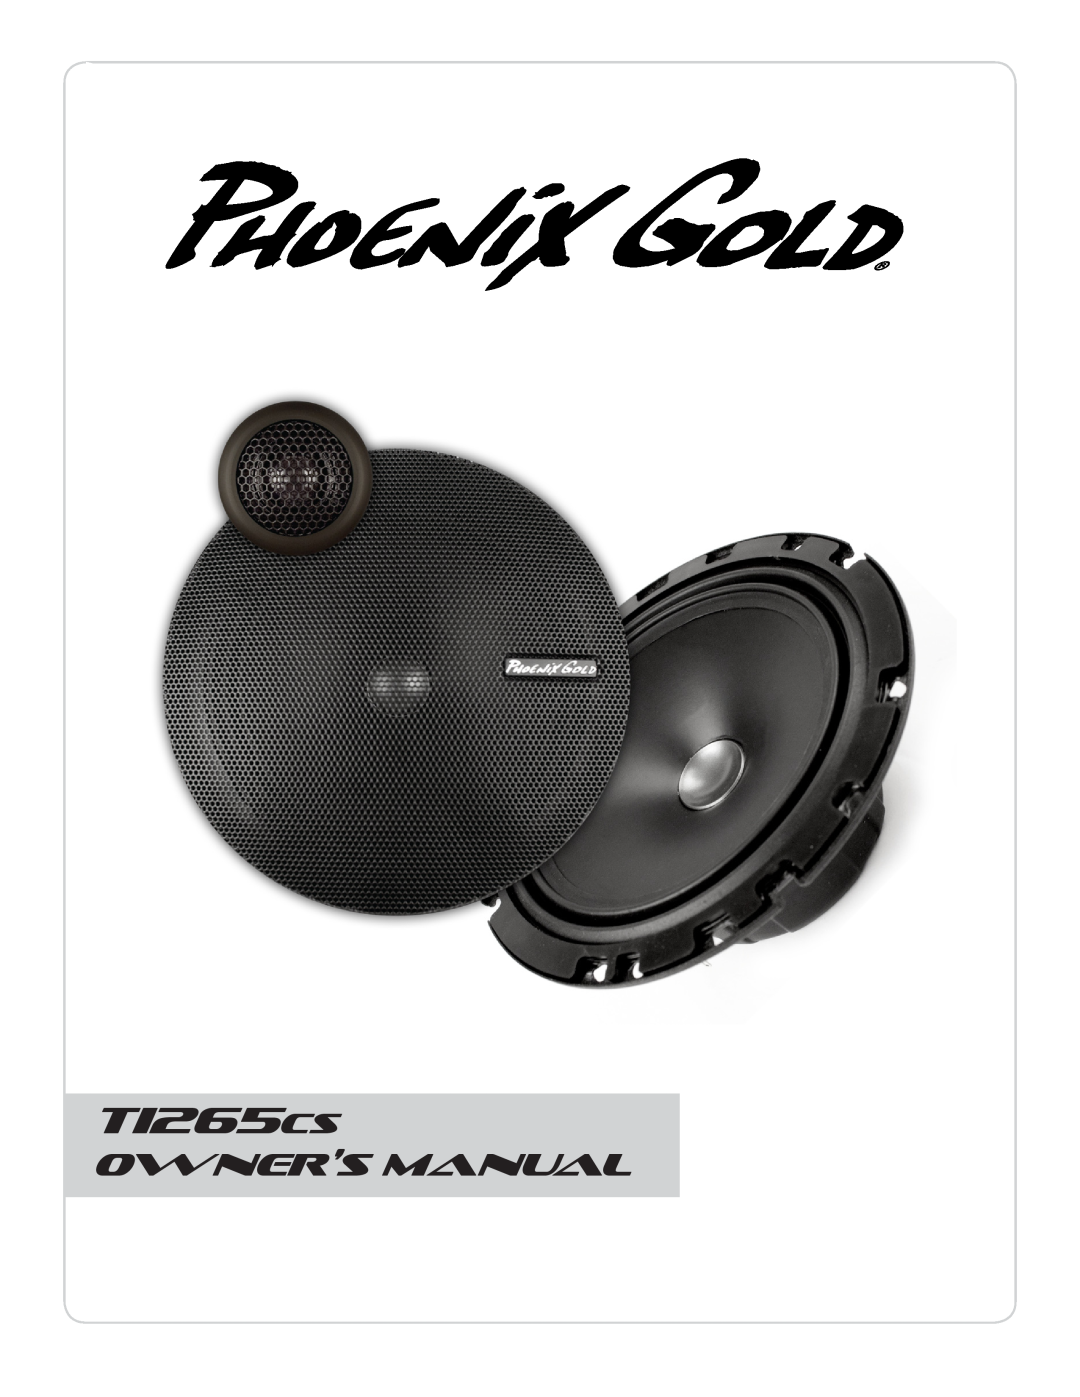 Phoenix Gold TI265CS owner manual 